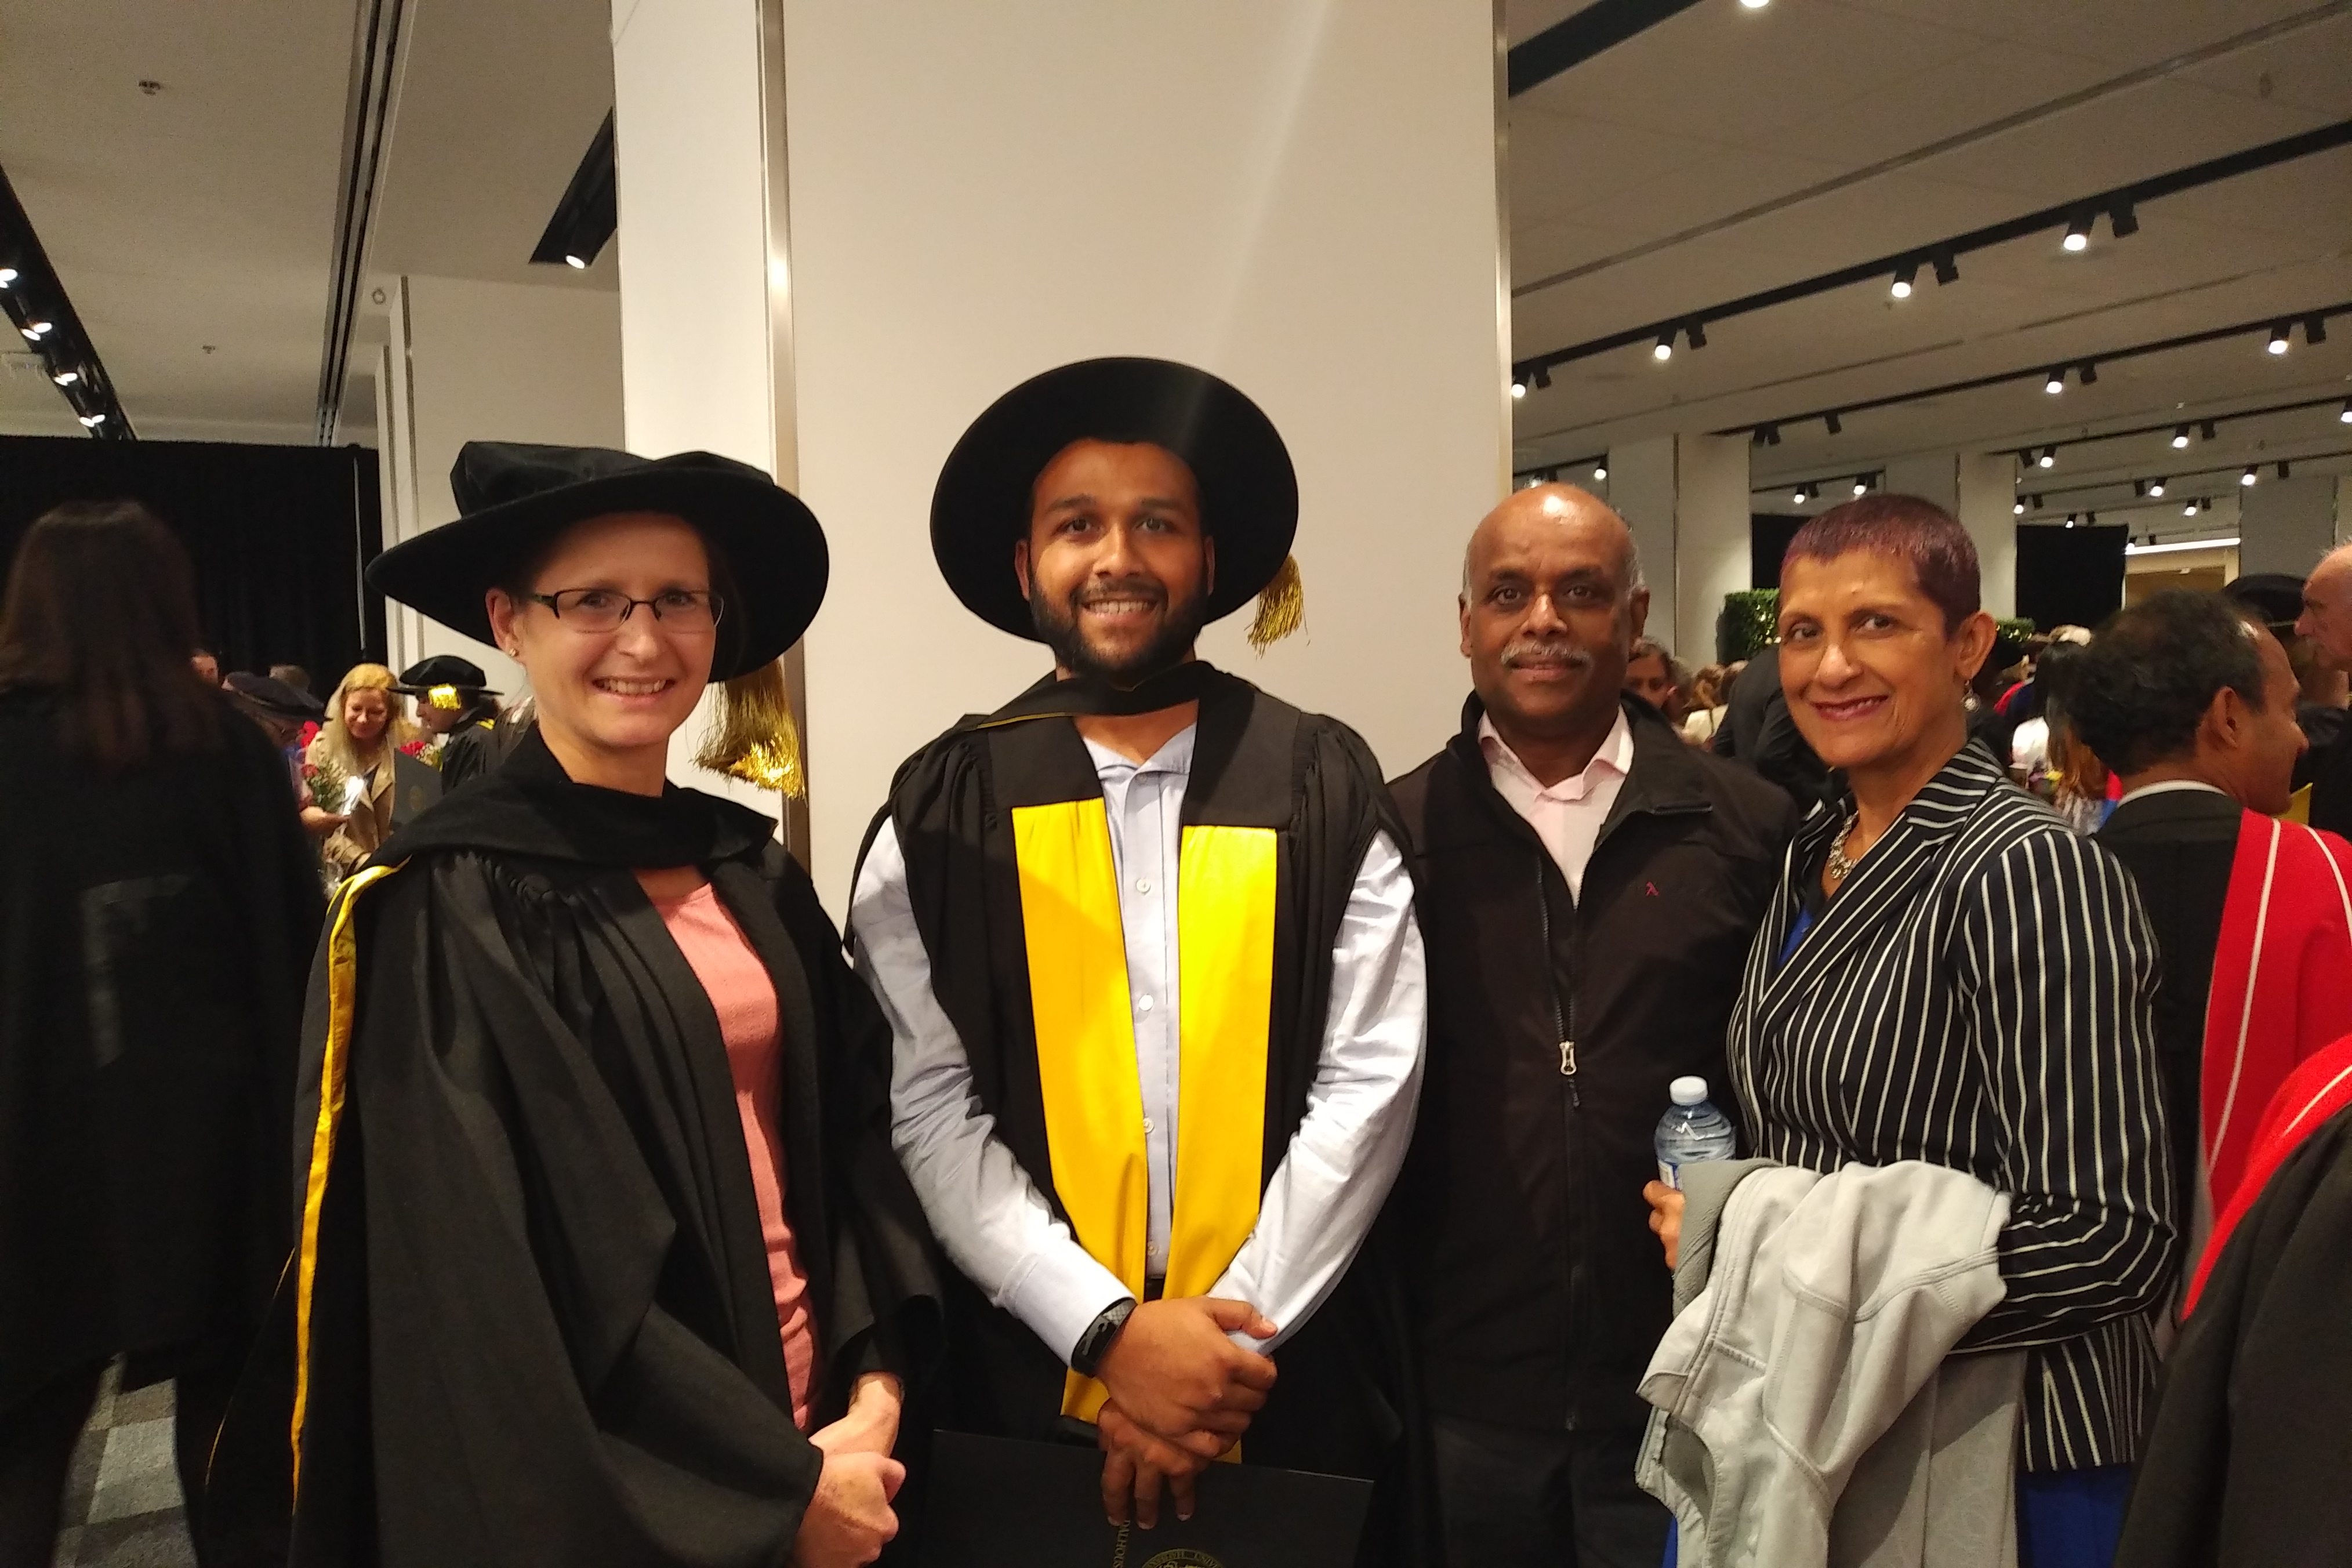 We celebrated Dr. D’Souza’s achievements at the Dalhousie University fall convocation